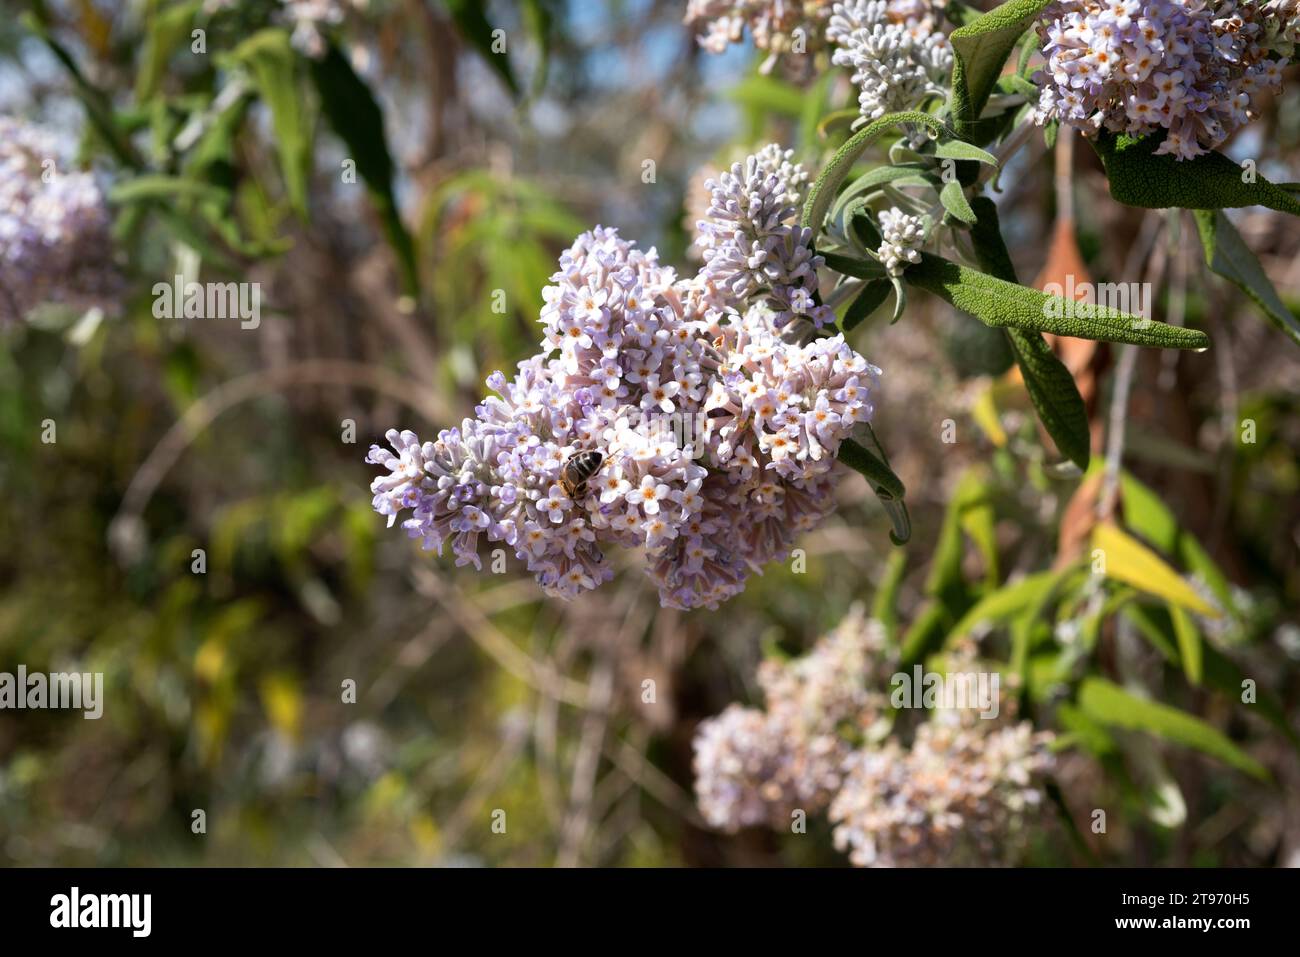 Sage bush or sagewood (Buddleja salviifolia) is a shrub endemic to eastern Africa. Stock Photo